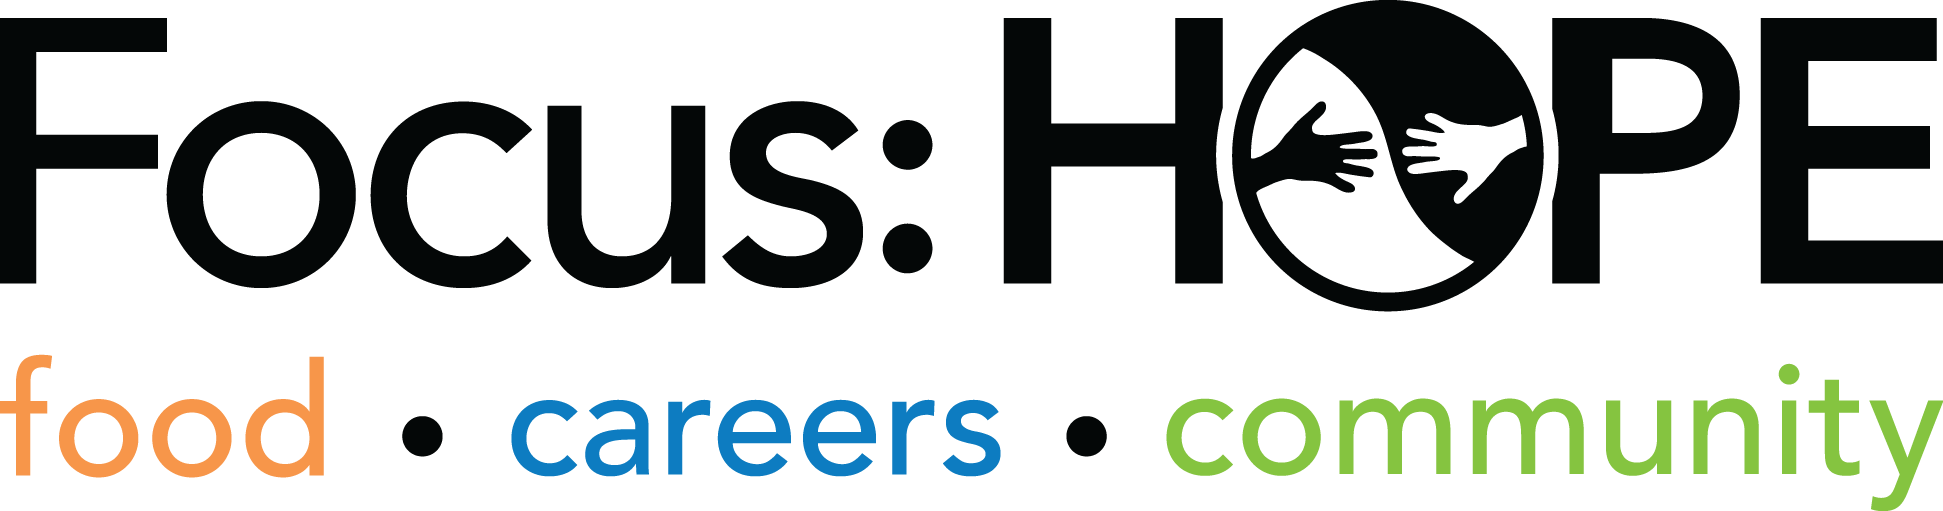 focus:hope food careers community logo